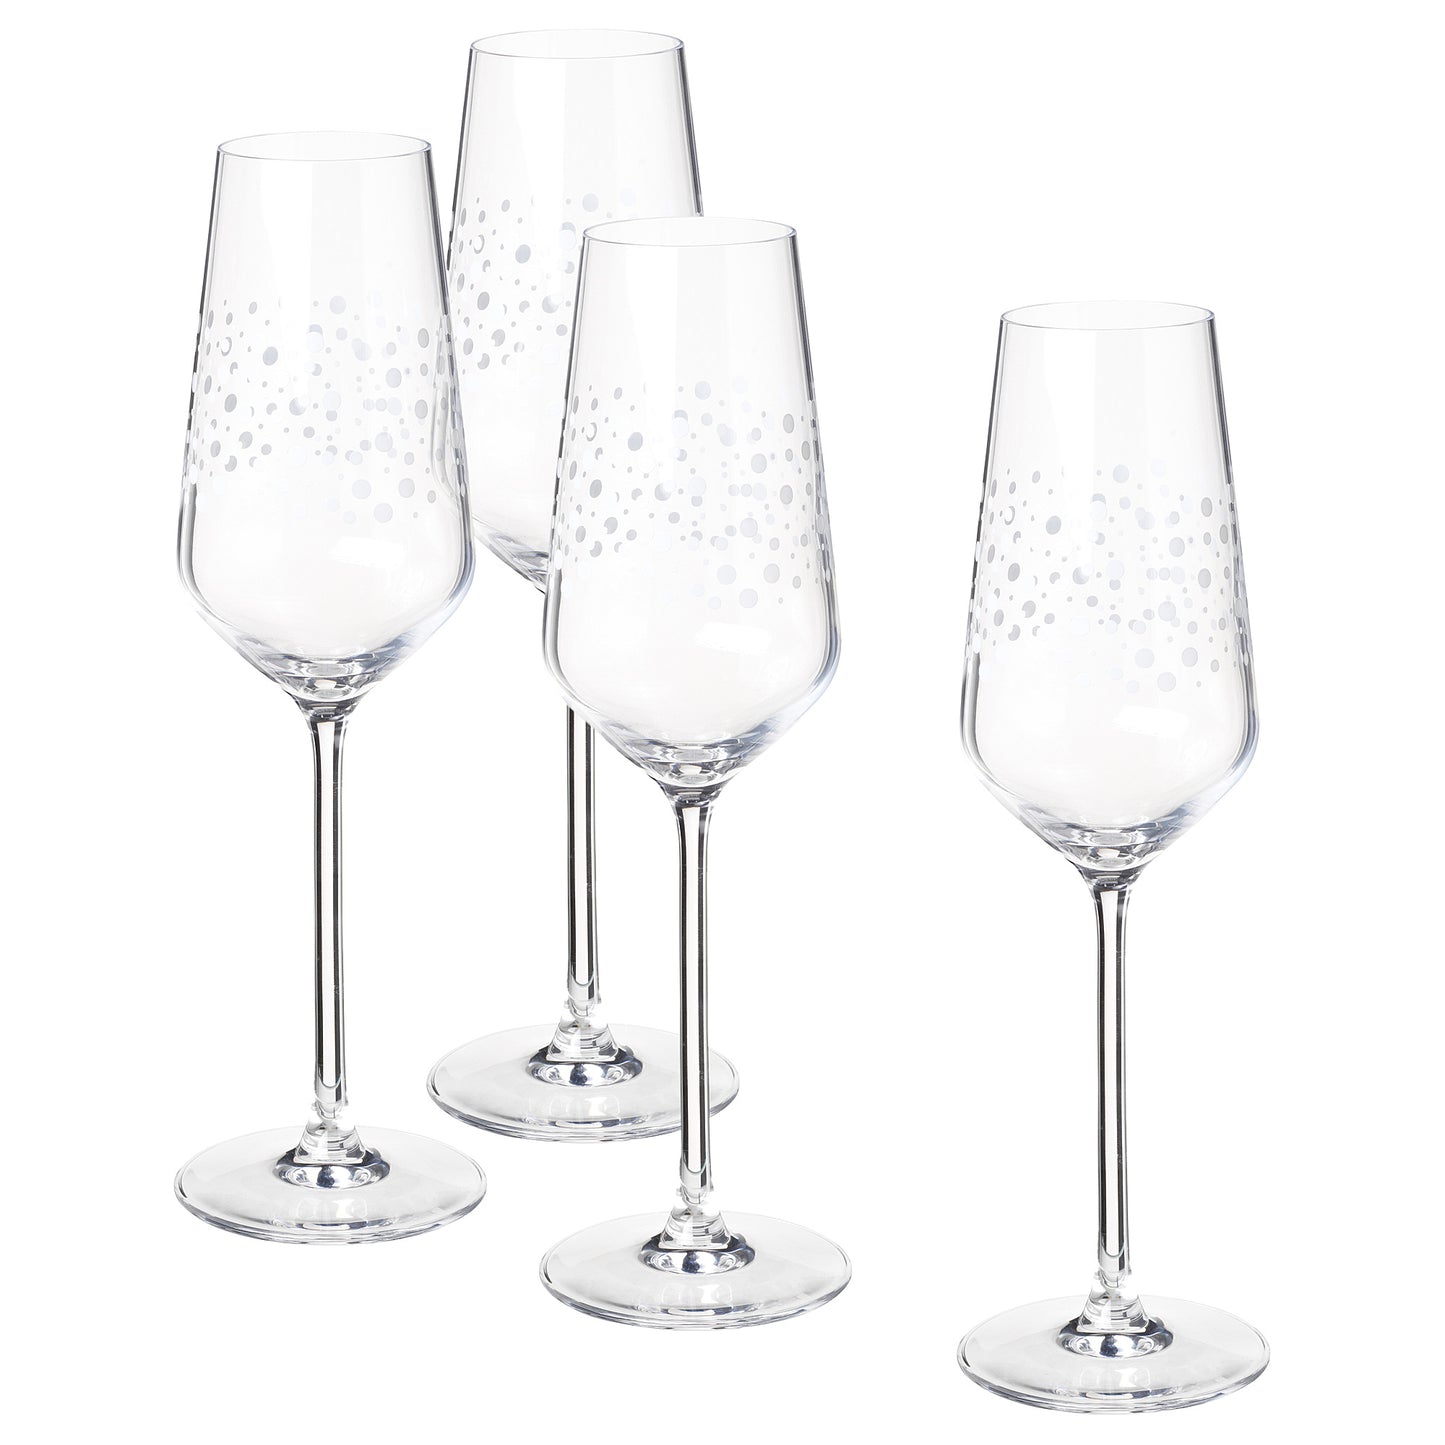 INBJUDEN champagne glass, clear glass, 24 cl